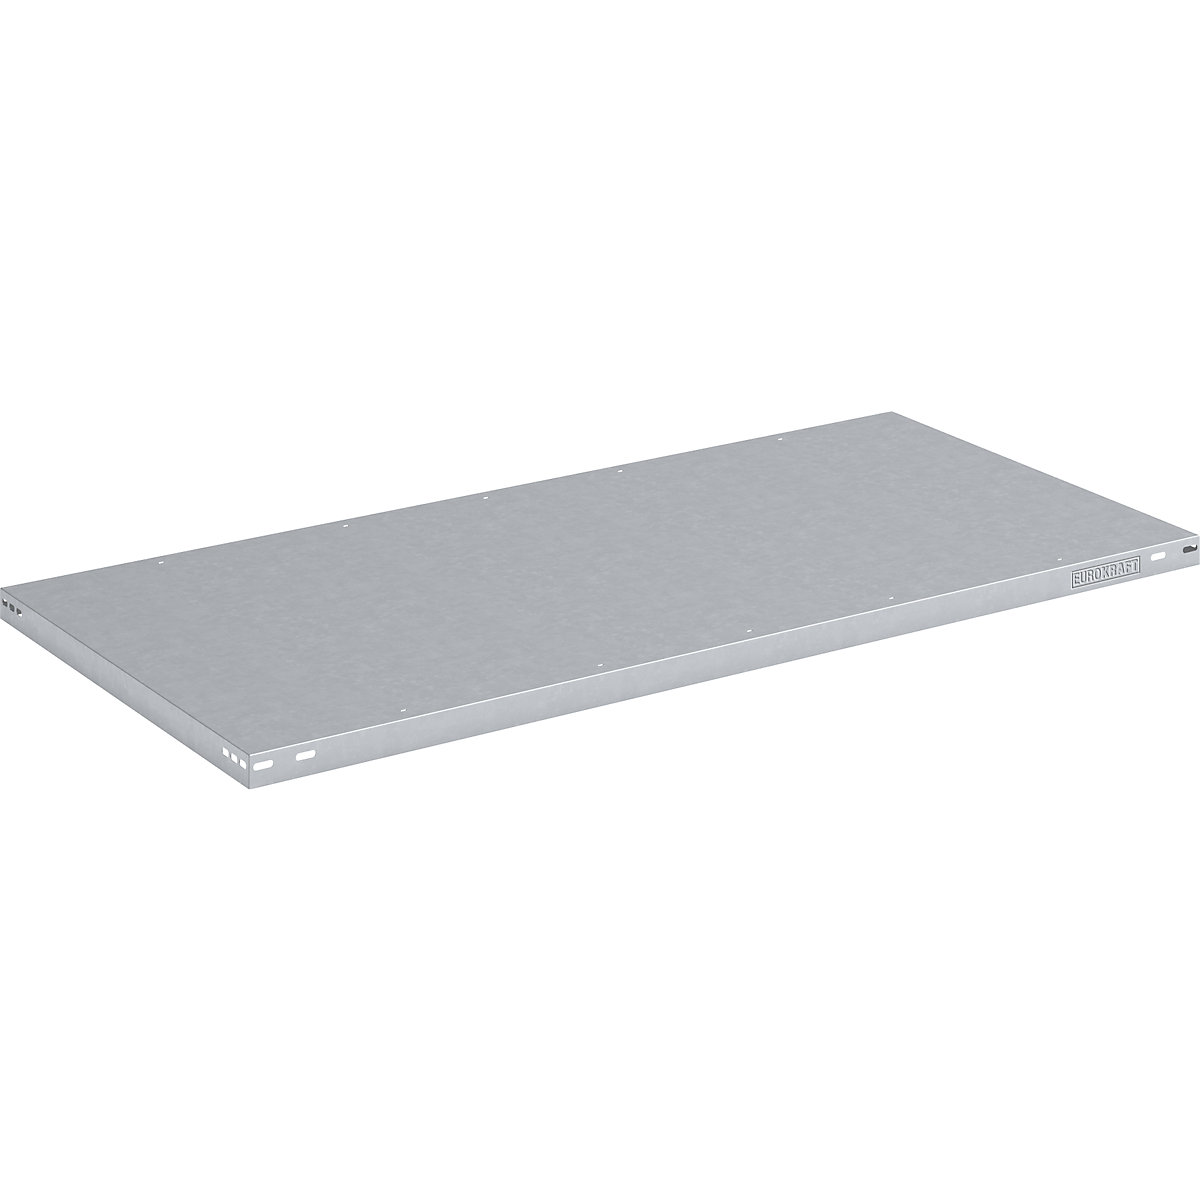 Steel shelf, max. load 125 kg – eurokraft pro, zinc plated, WxD 1300 x 800 mm